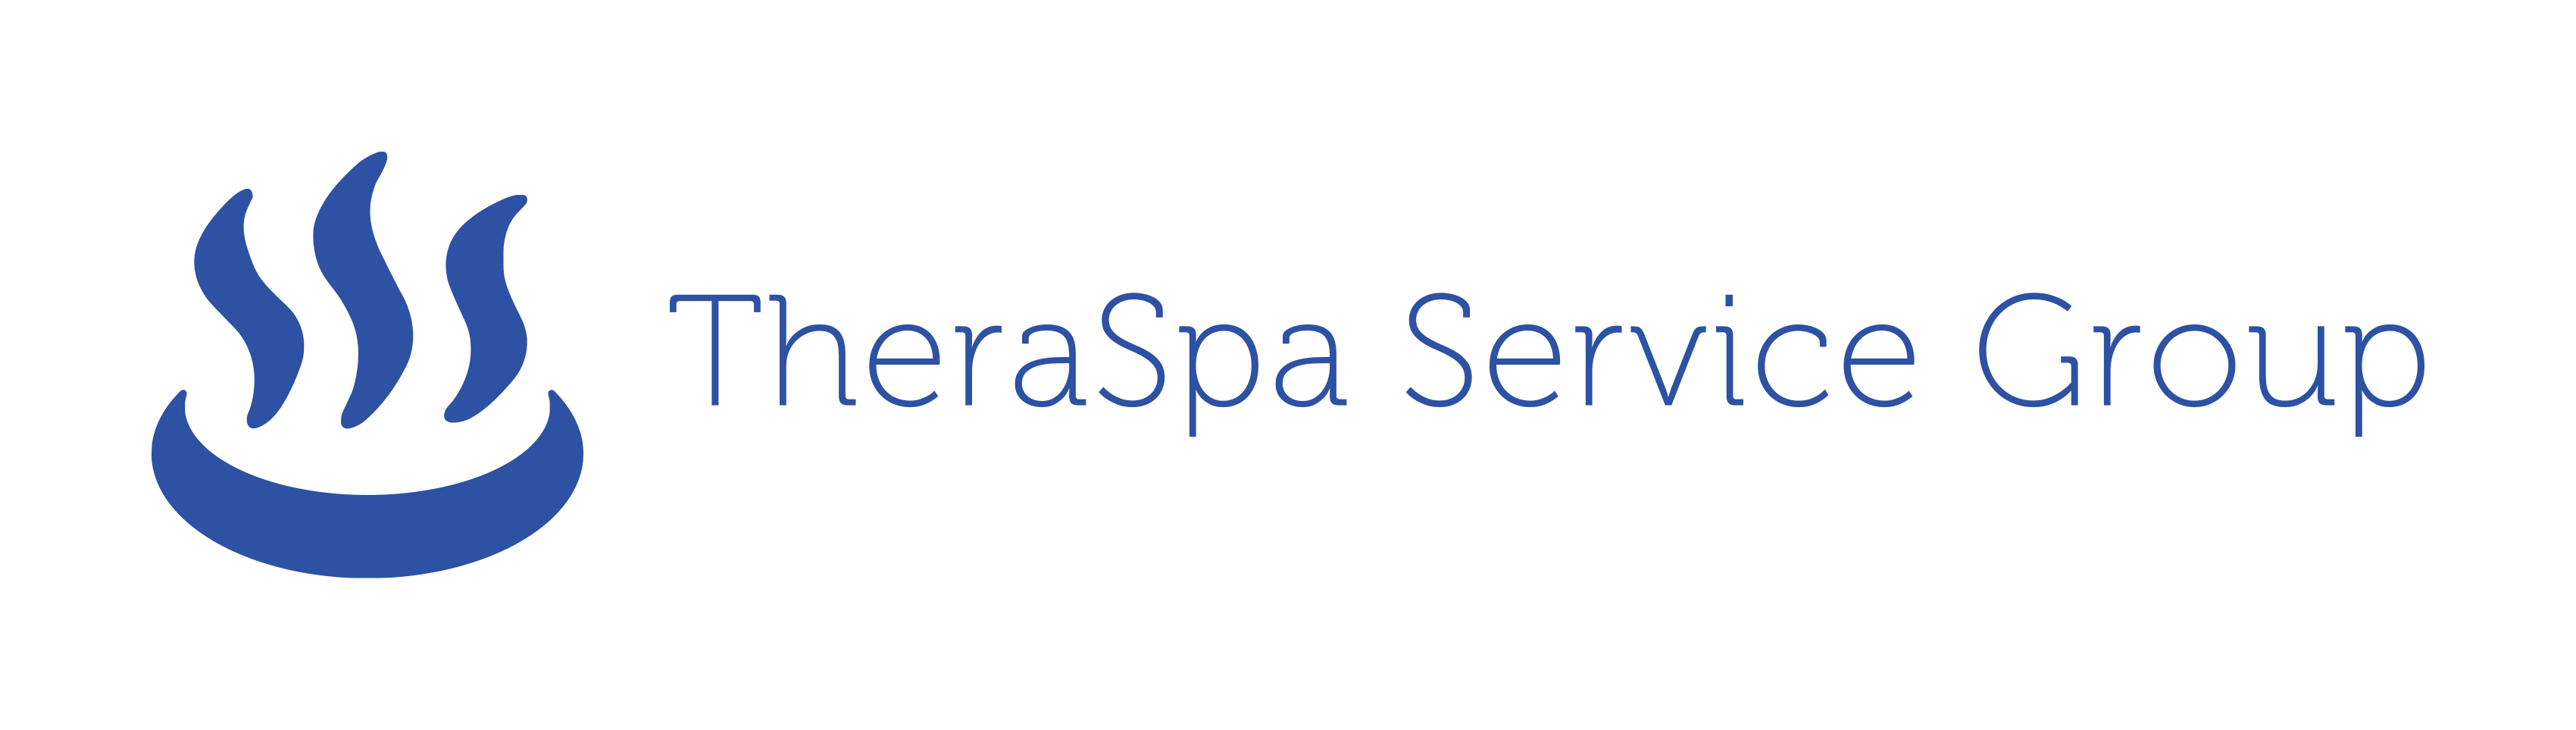 TheraSpa Service Group